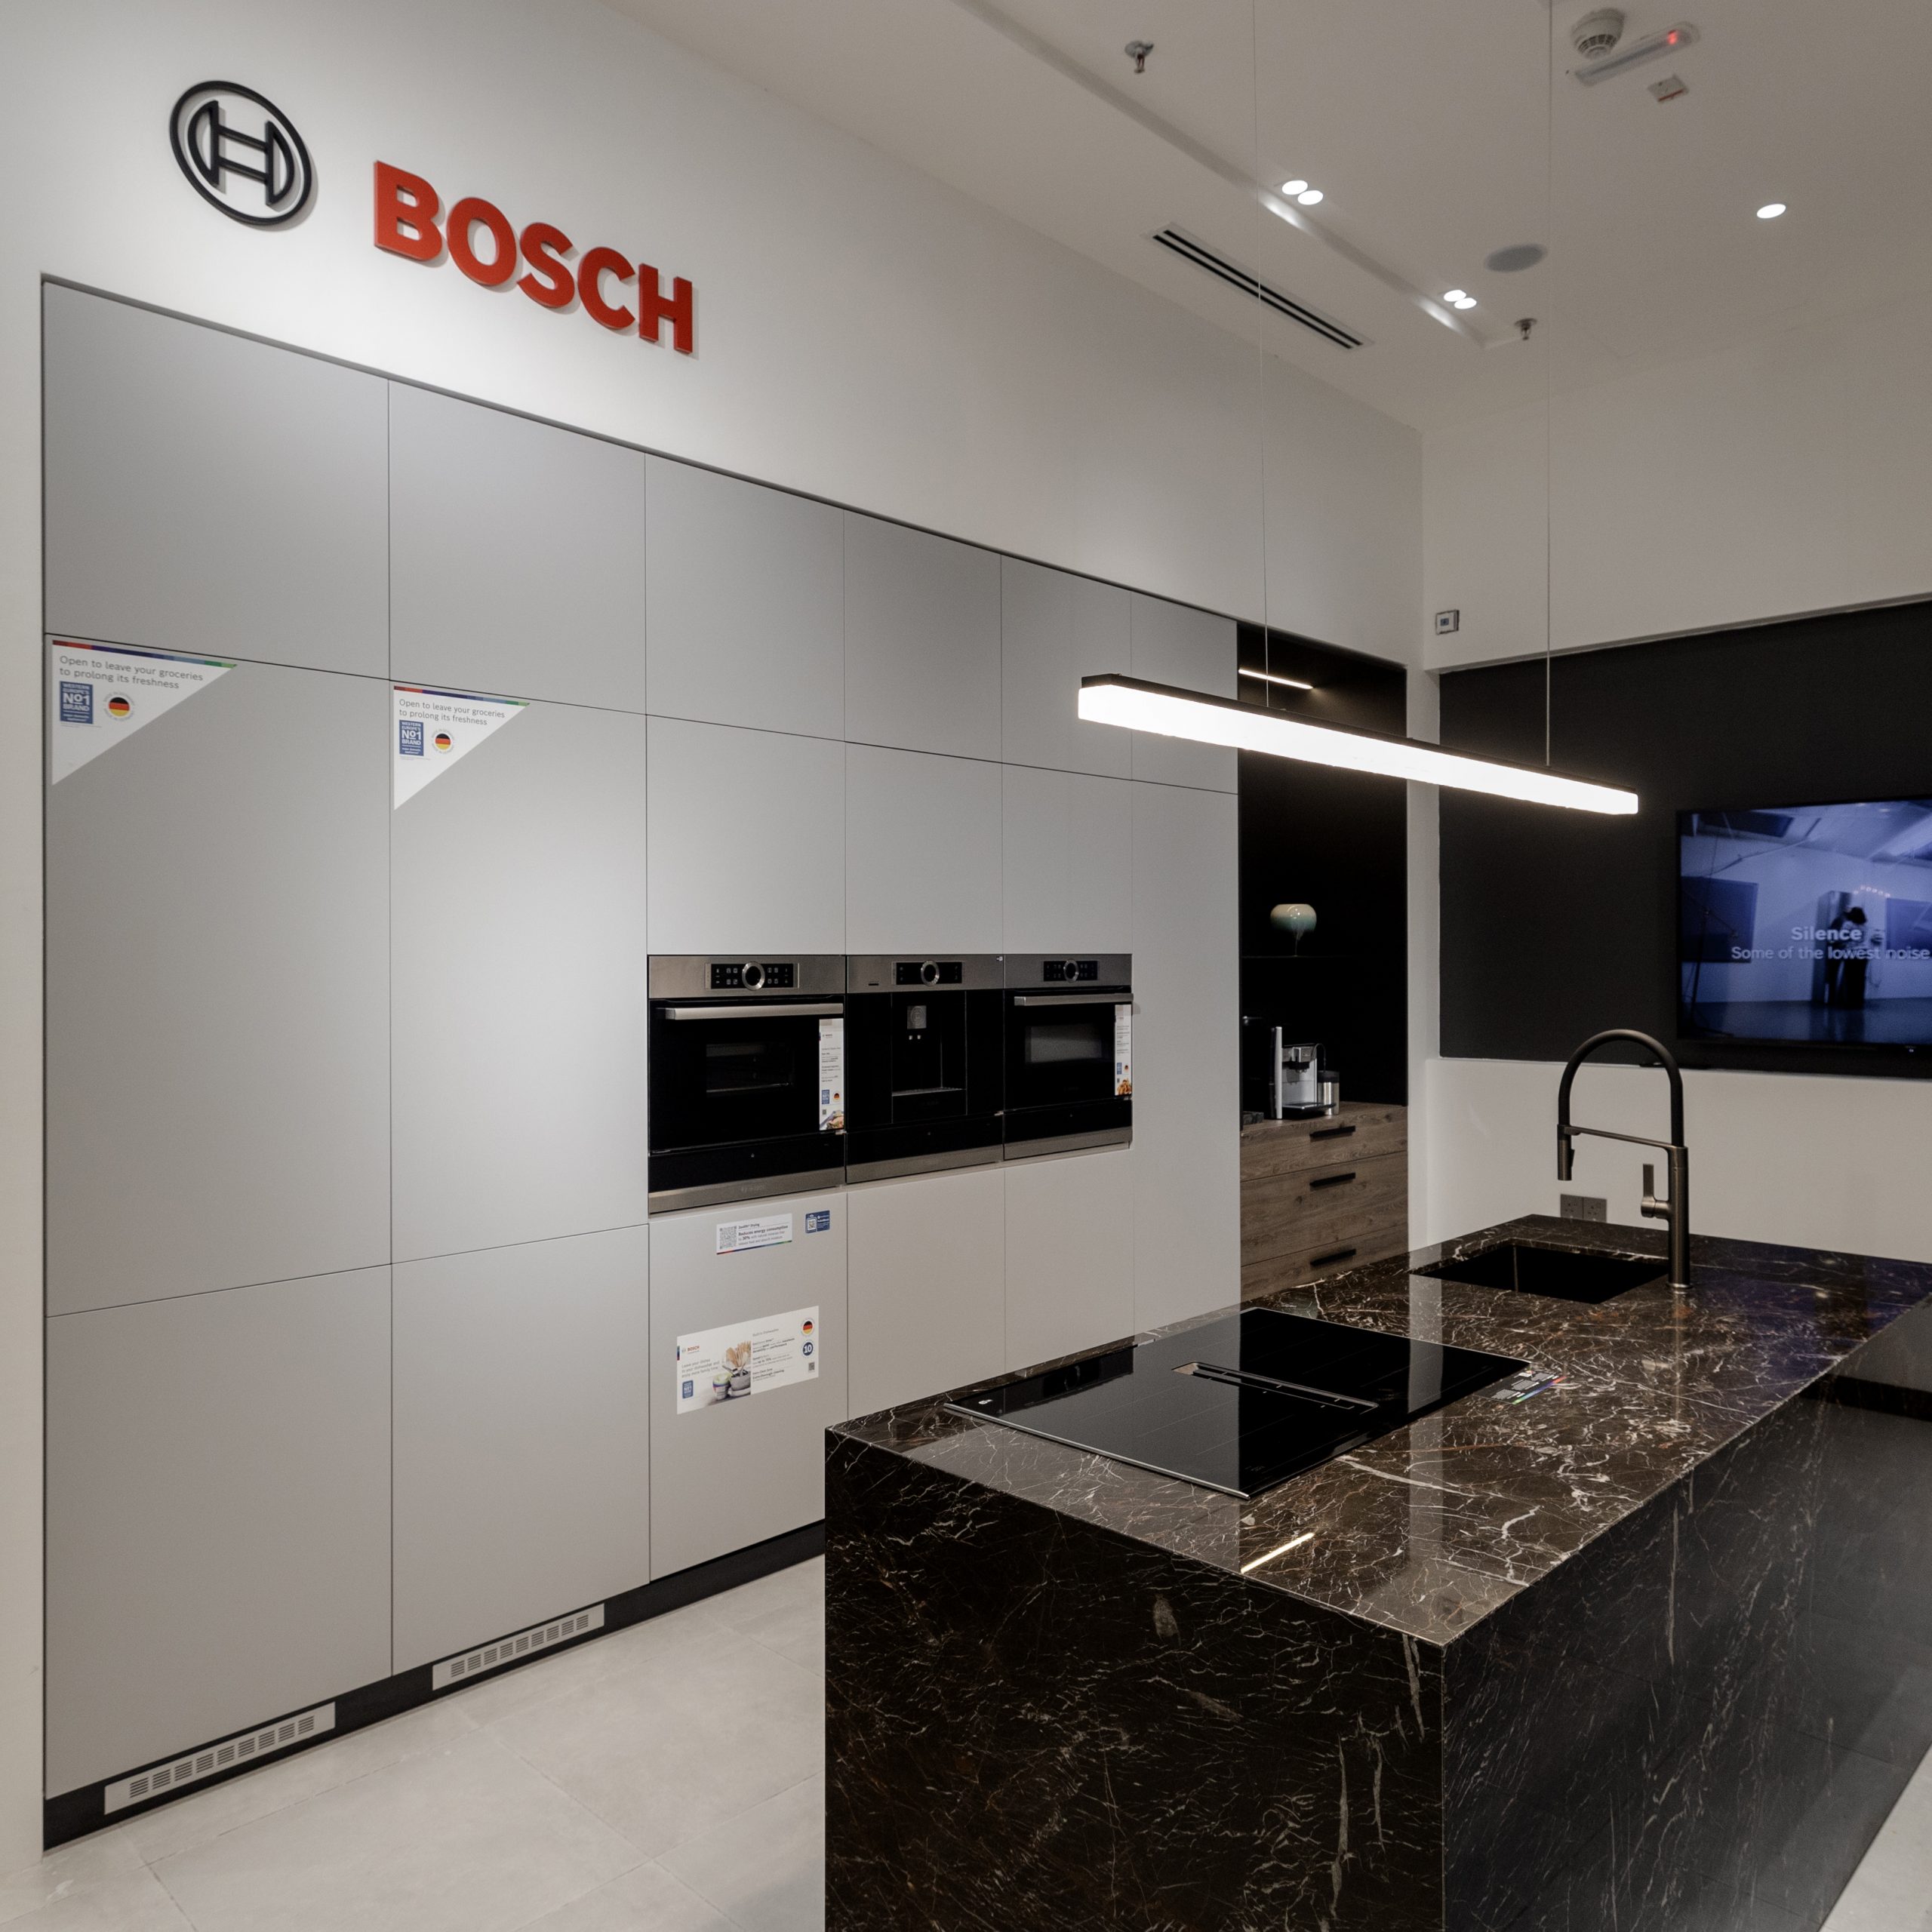 Bosch Malaysia